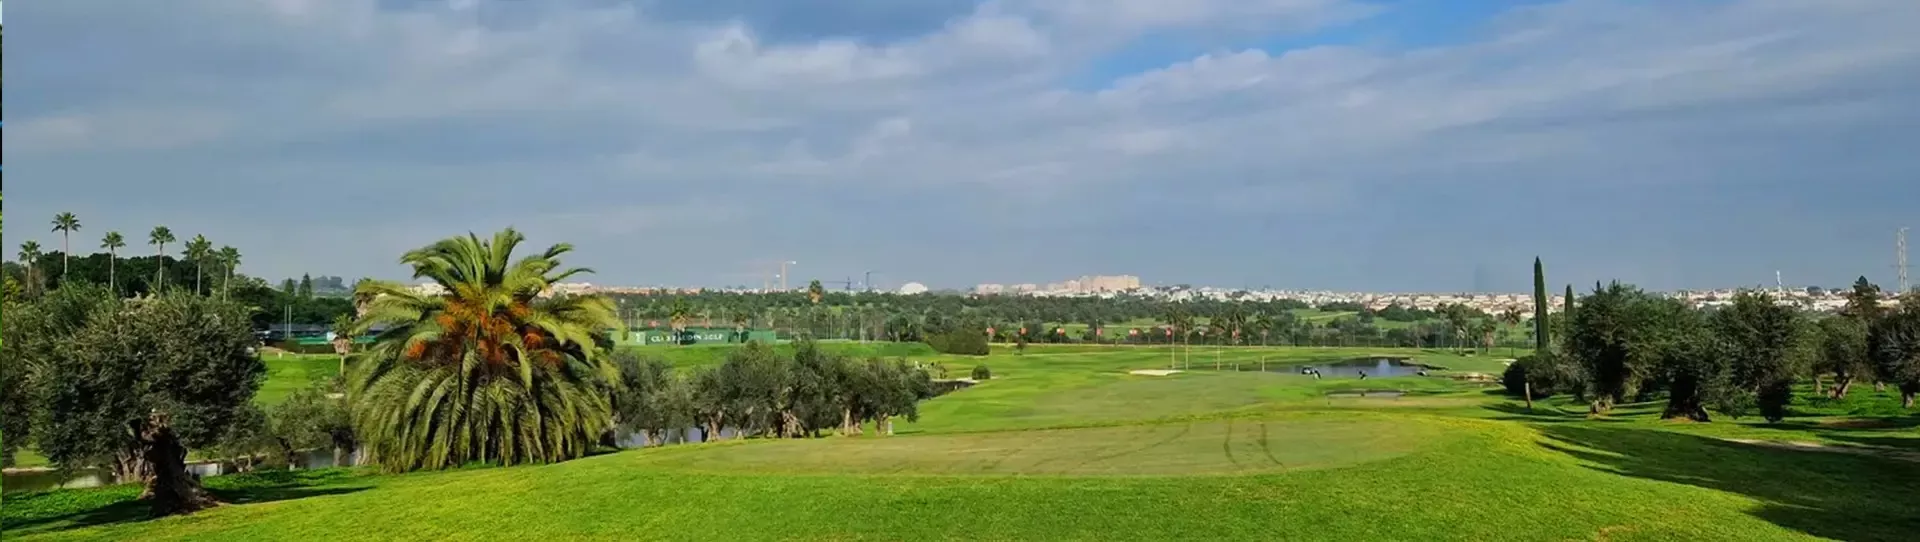 Spain Golf Driving Range - CLUB ZAUDIN GOLF SEVILLA DRIVING RANGE - Photo 2